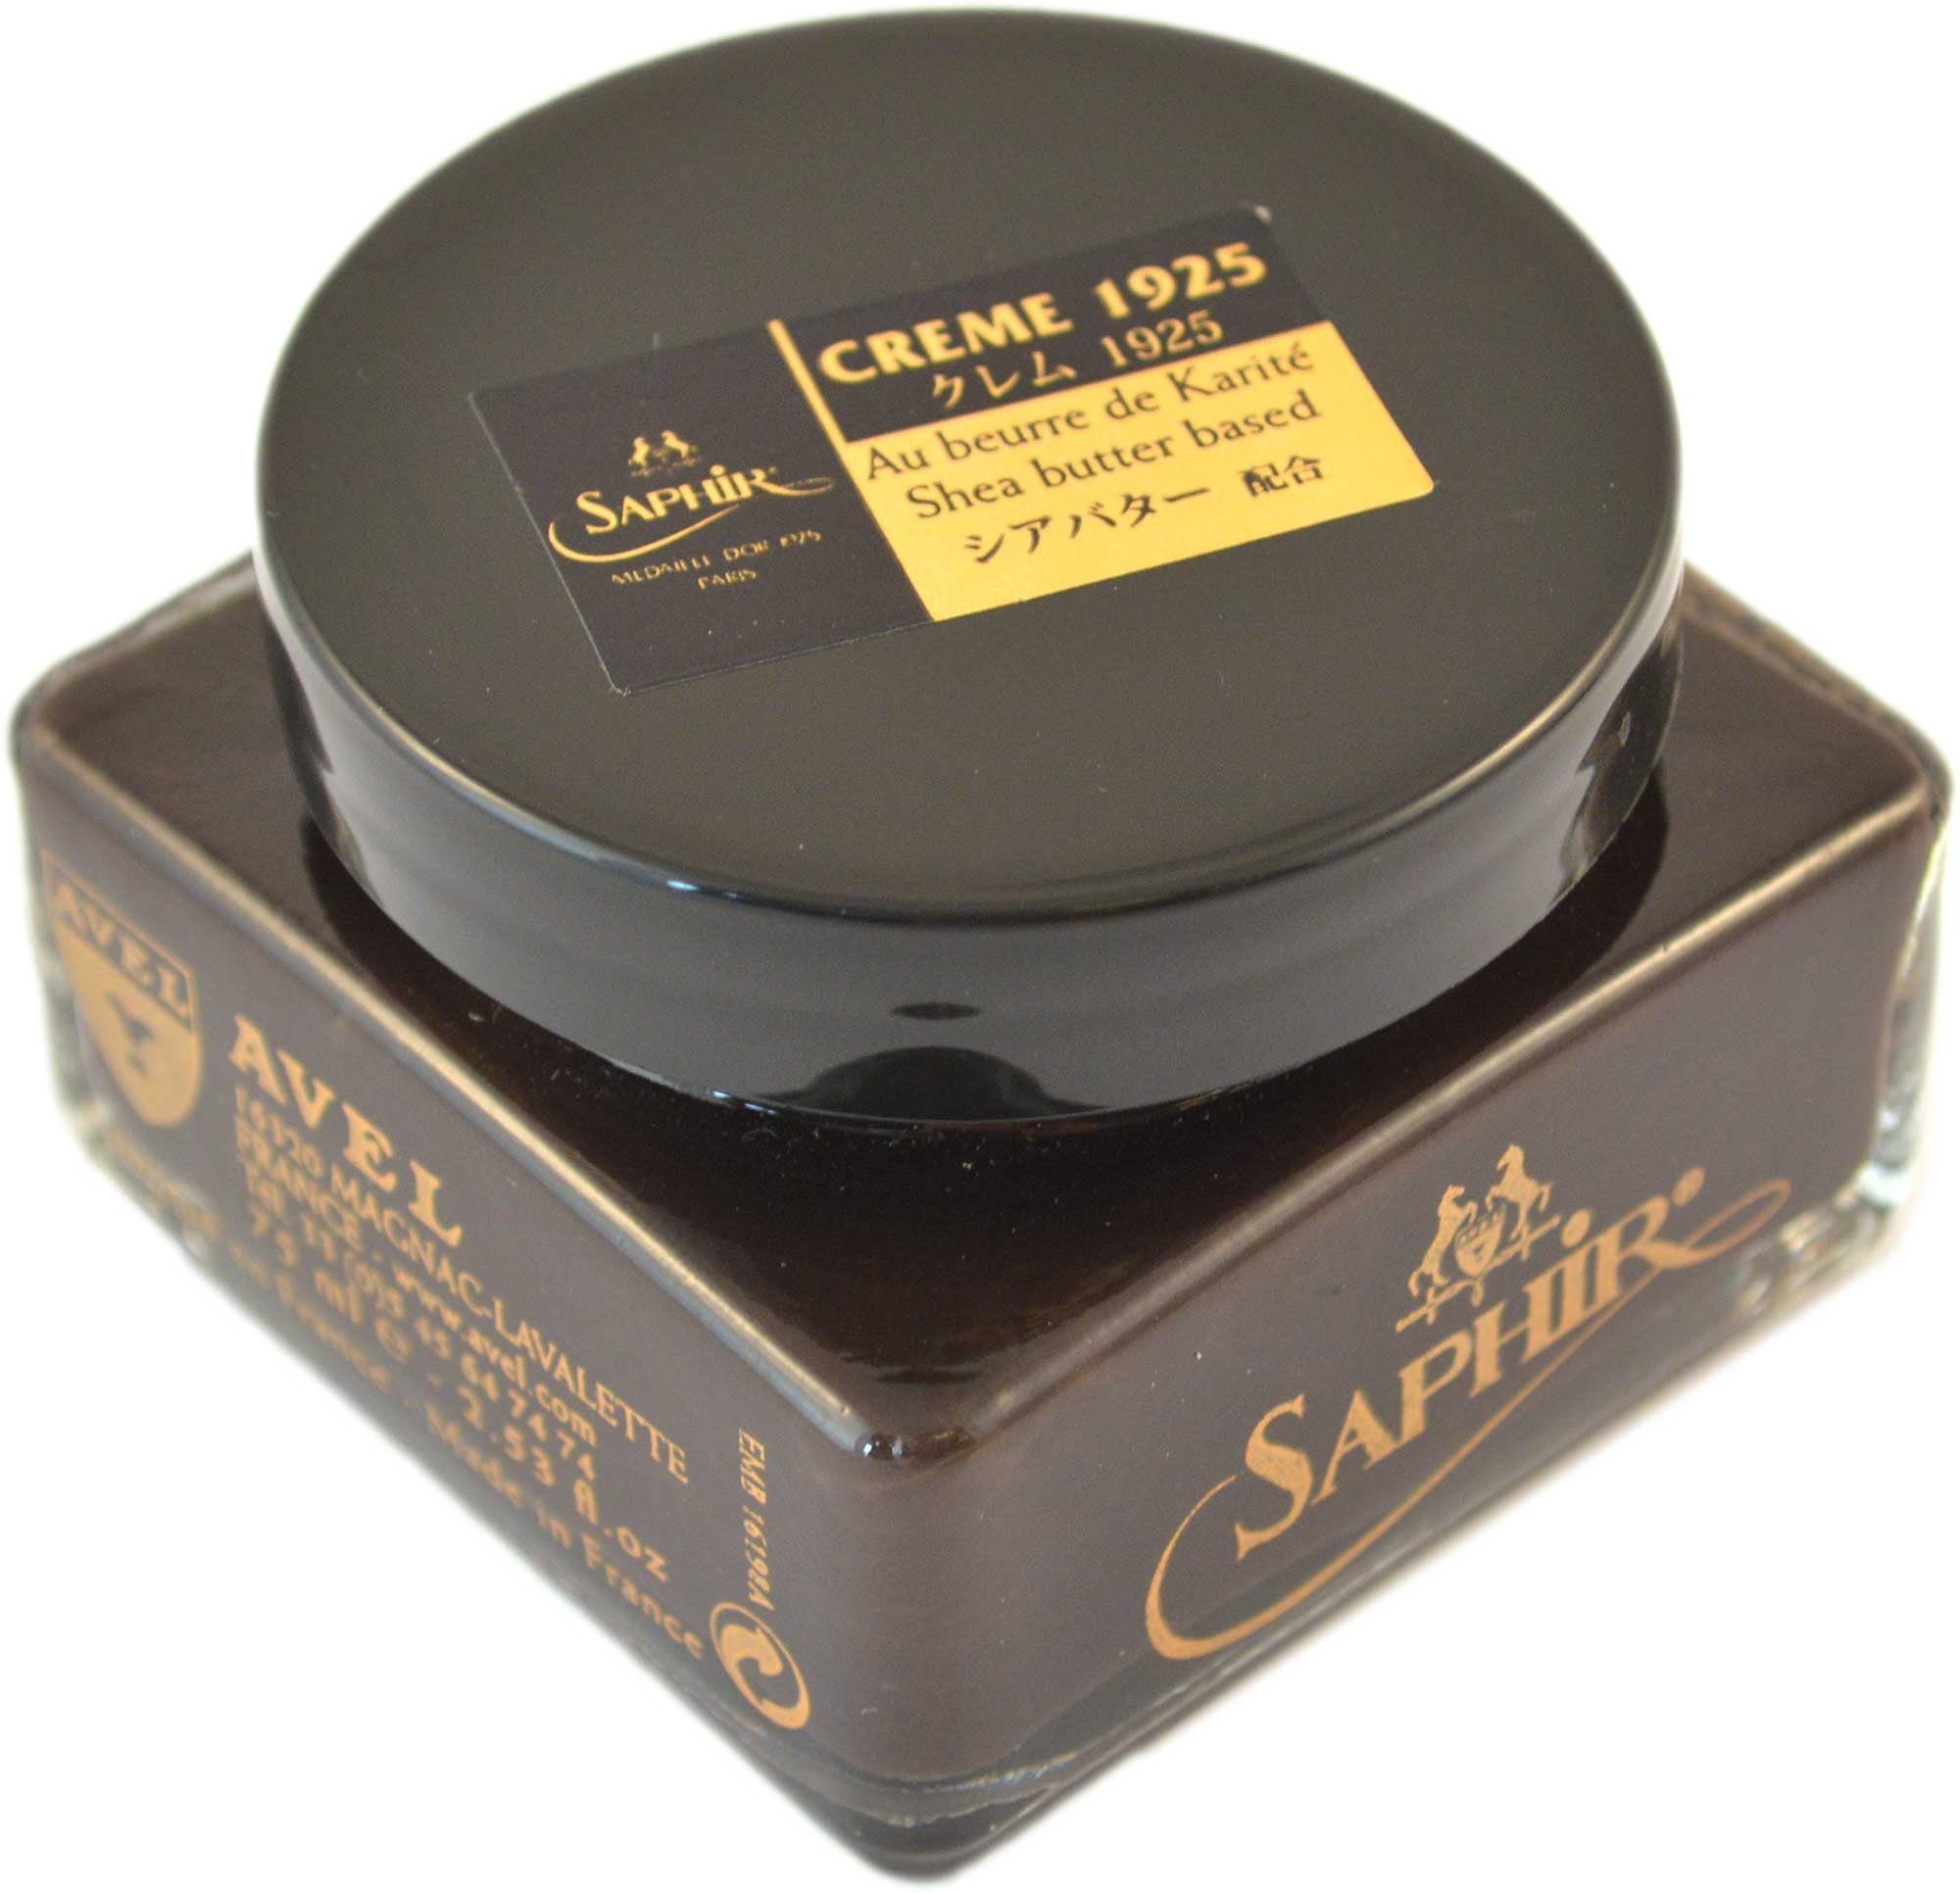 Saphir Universal Cream – Potter and Sons